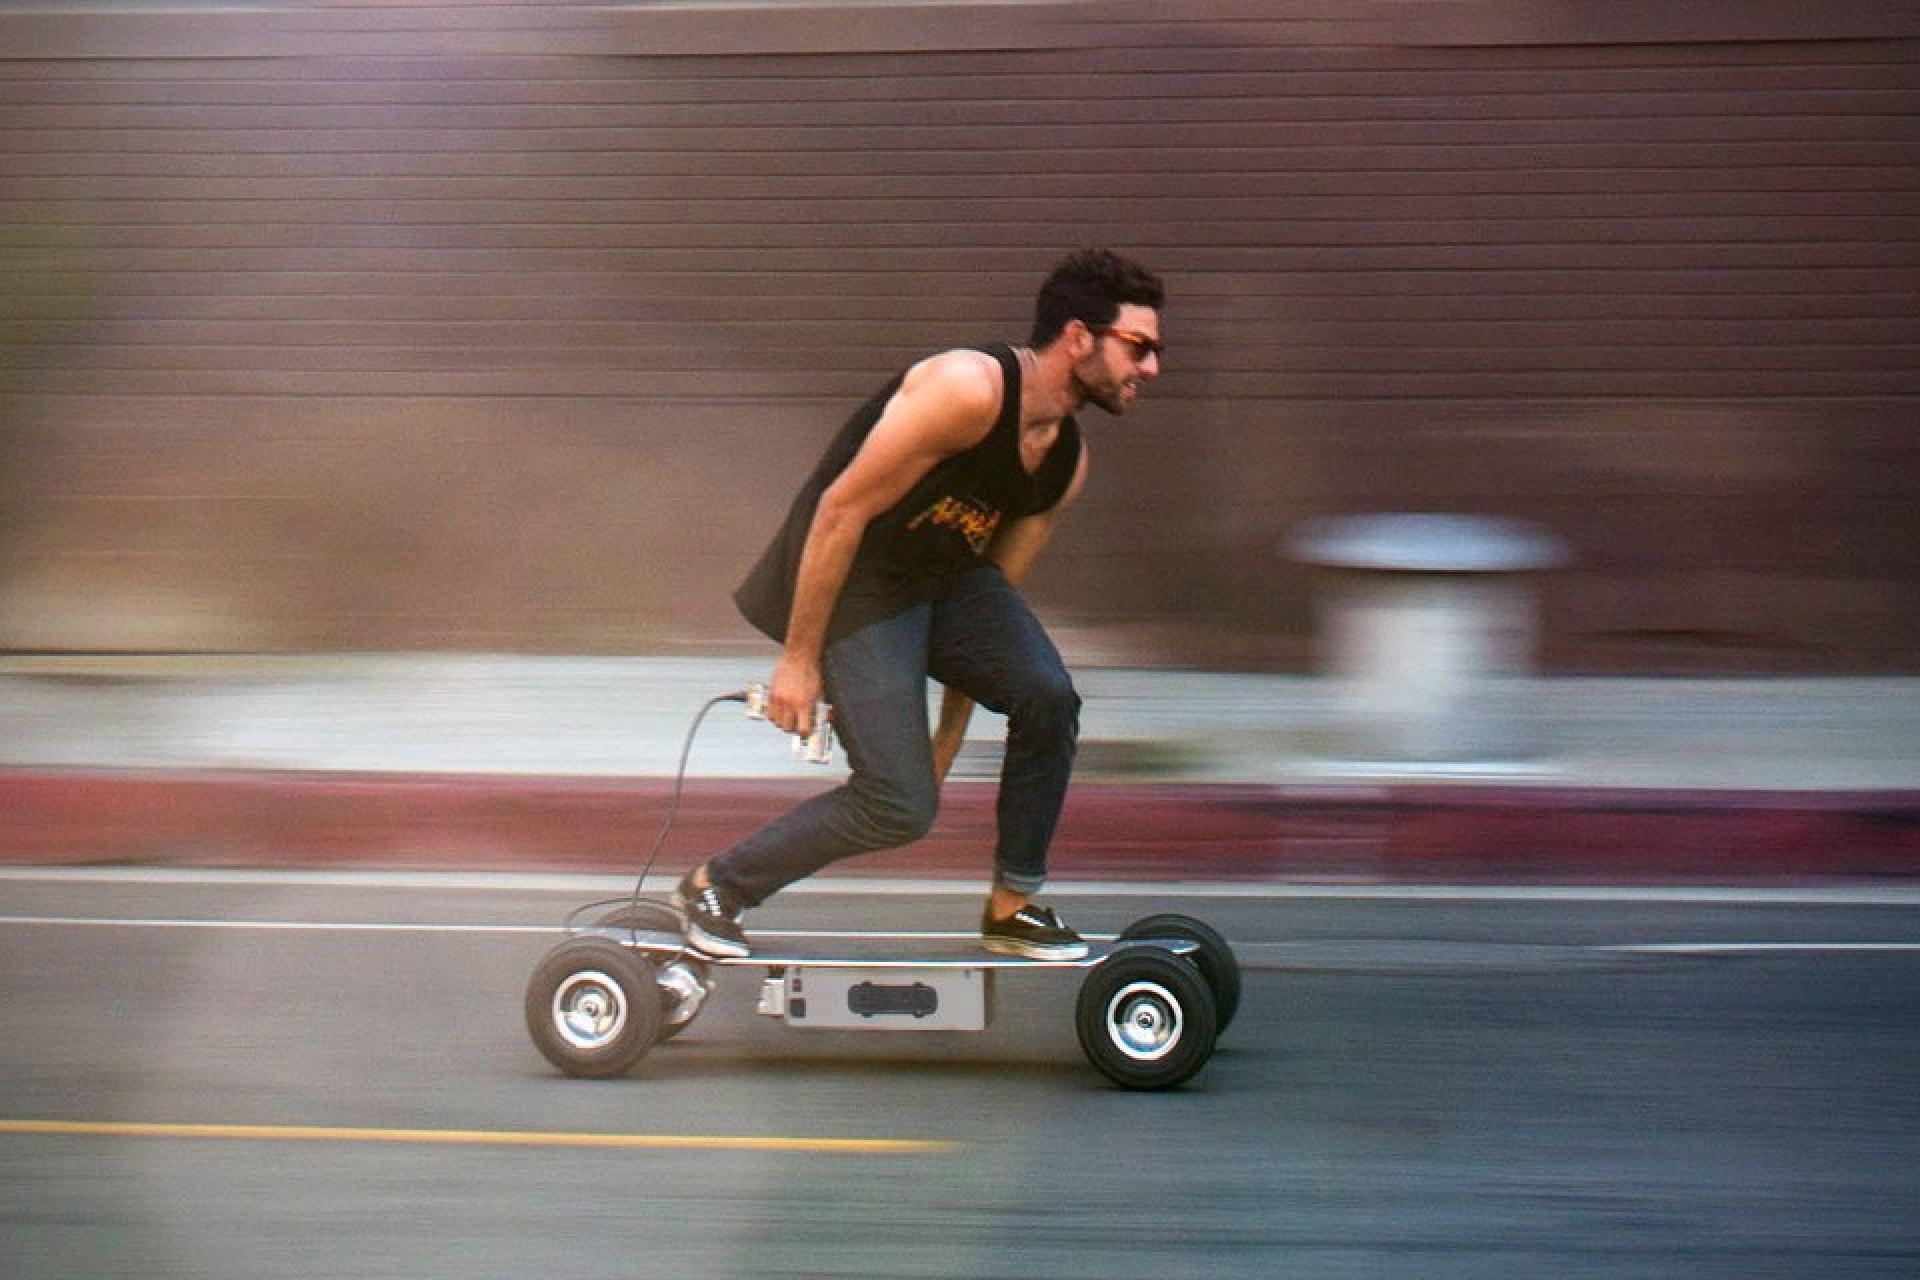 Skateboard scooter E-glide